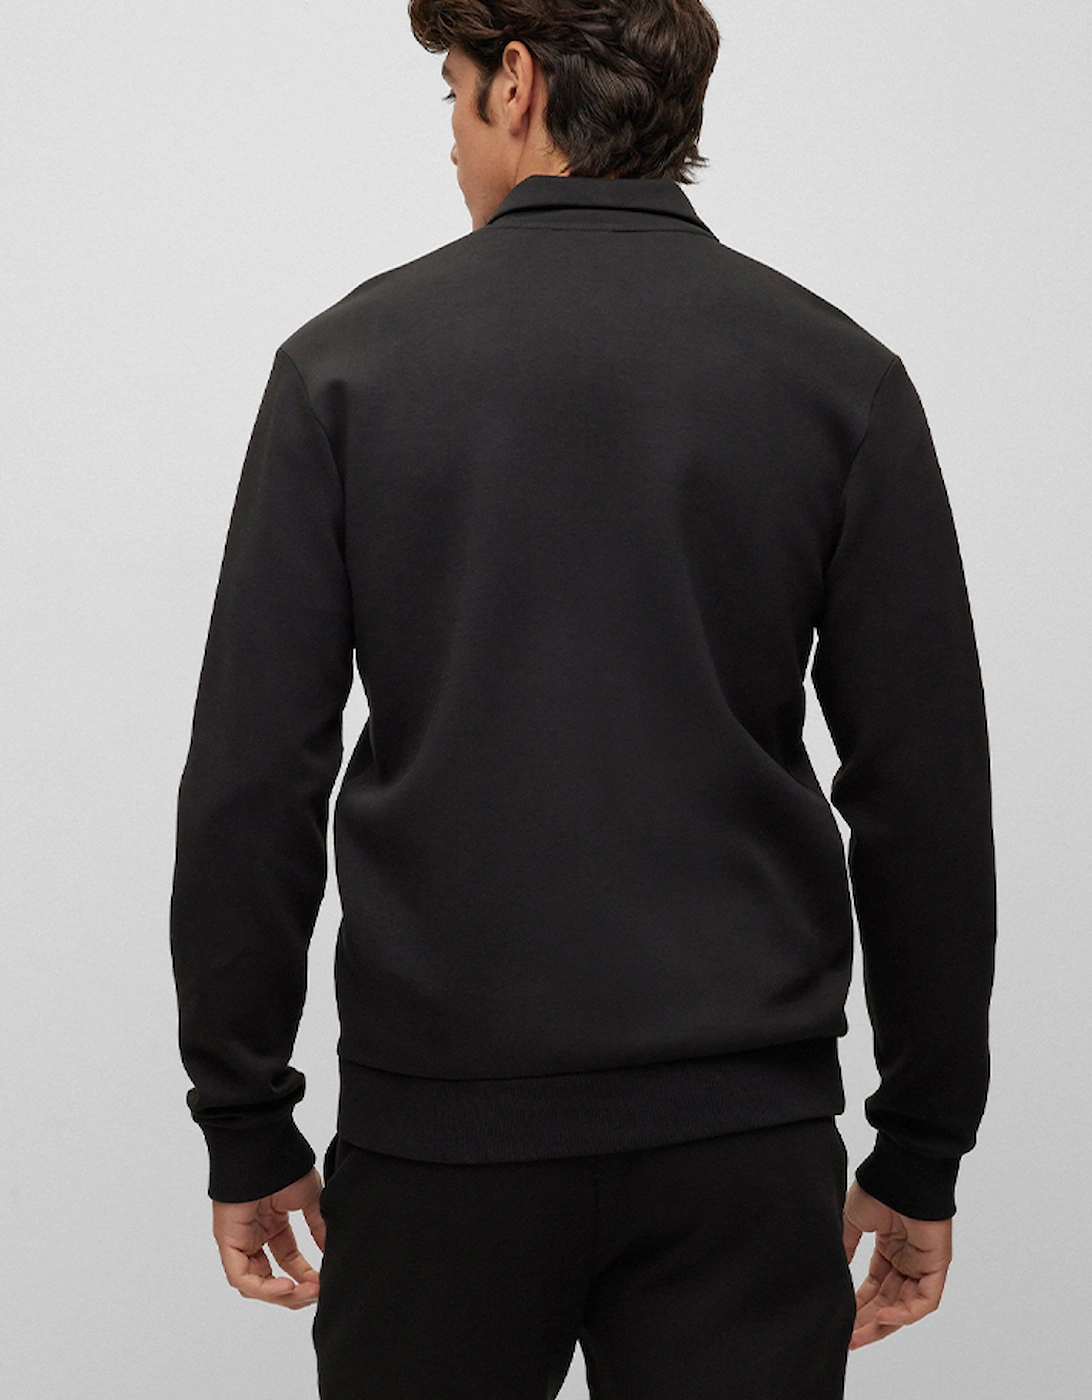 Men's Cotton-Blend Zip-Up Sweatshirt with Embroidered Logo